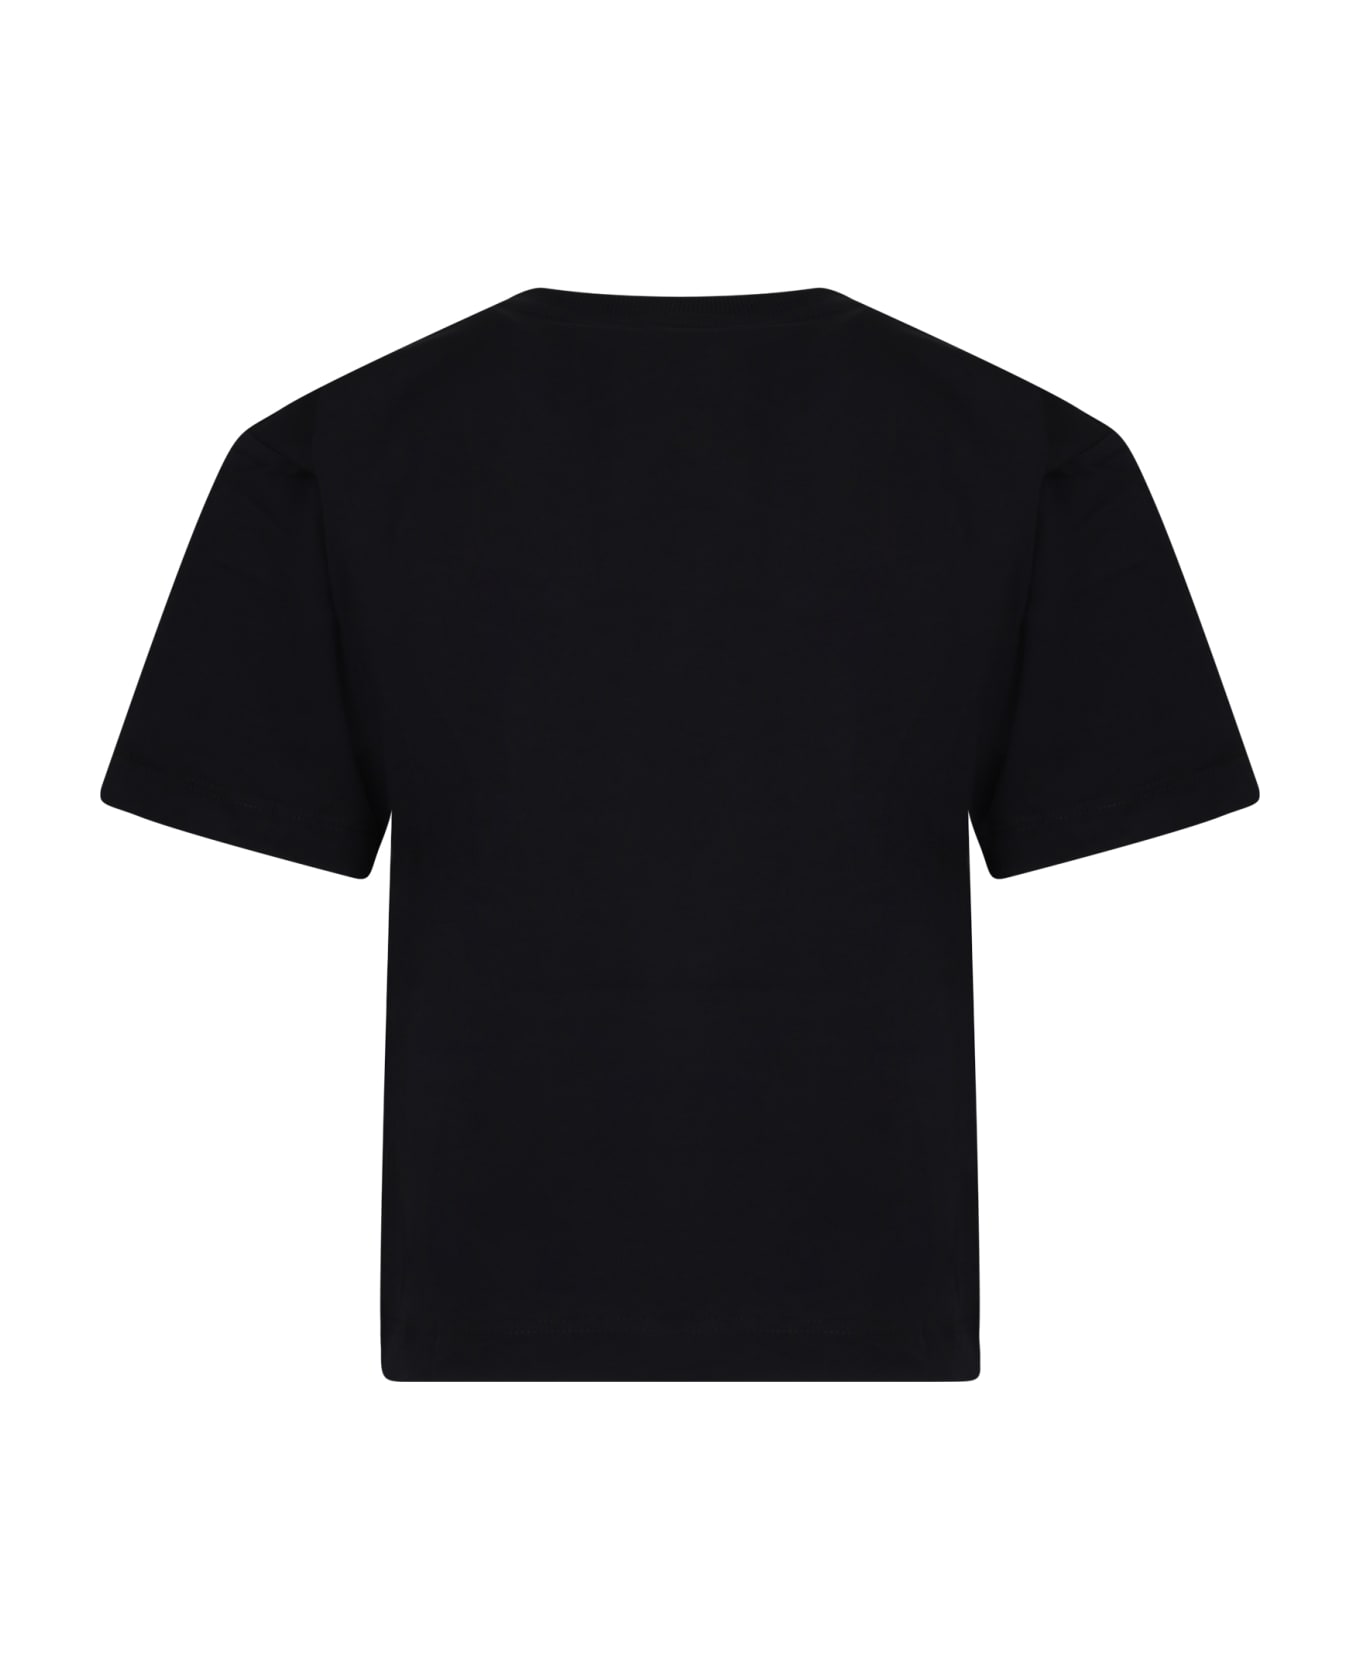 Moschino Black T-shirt For Boy With Teddy Bear - Black